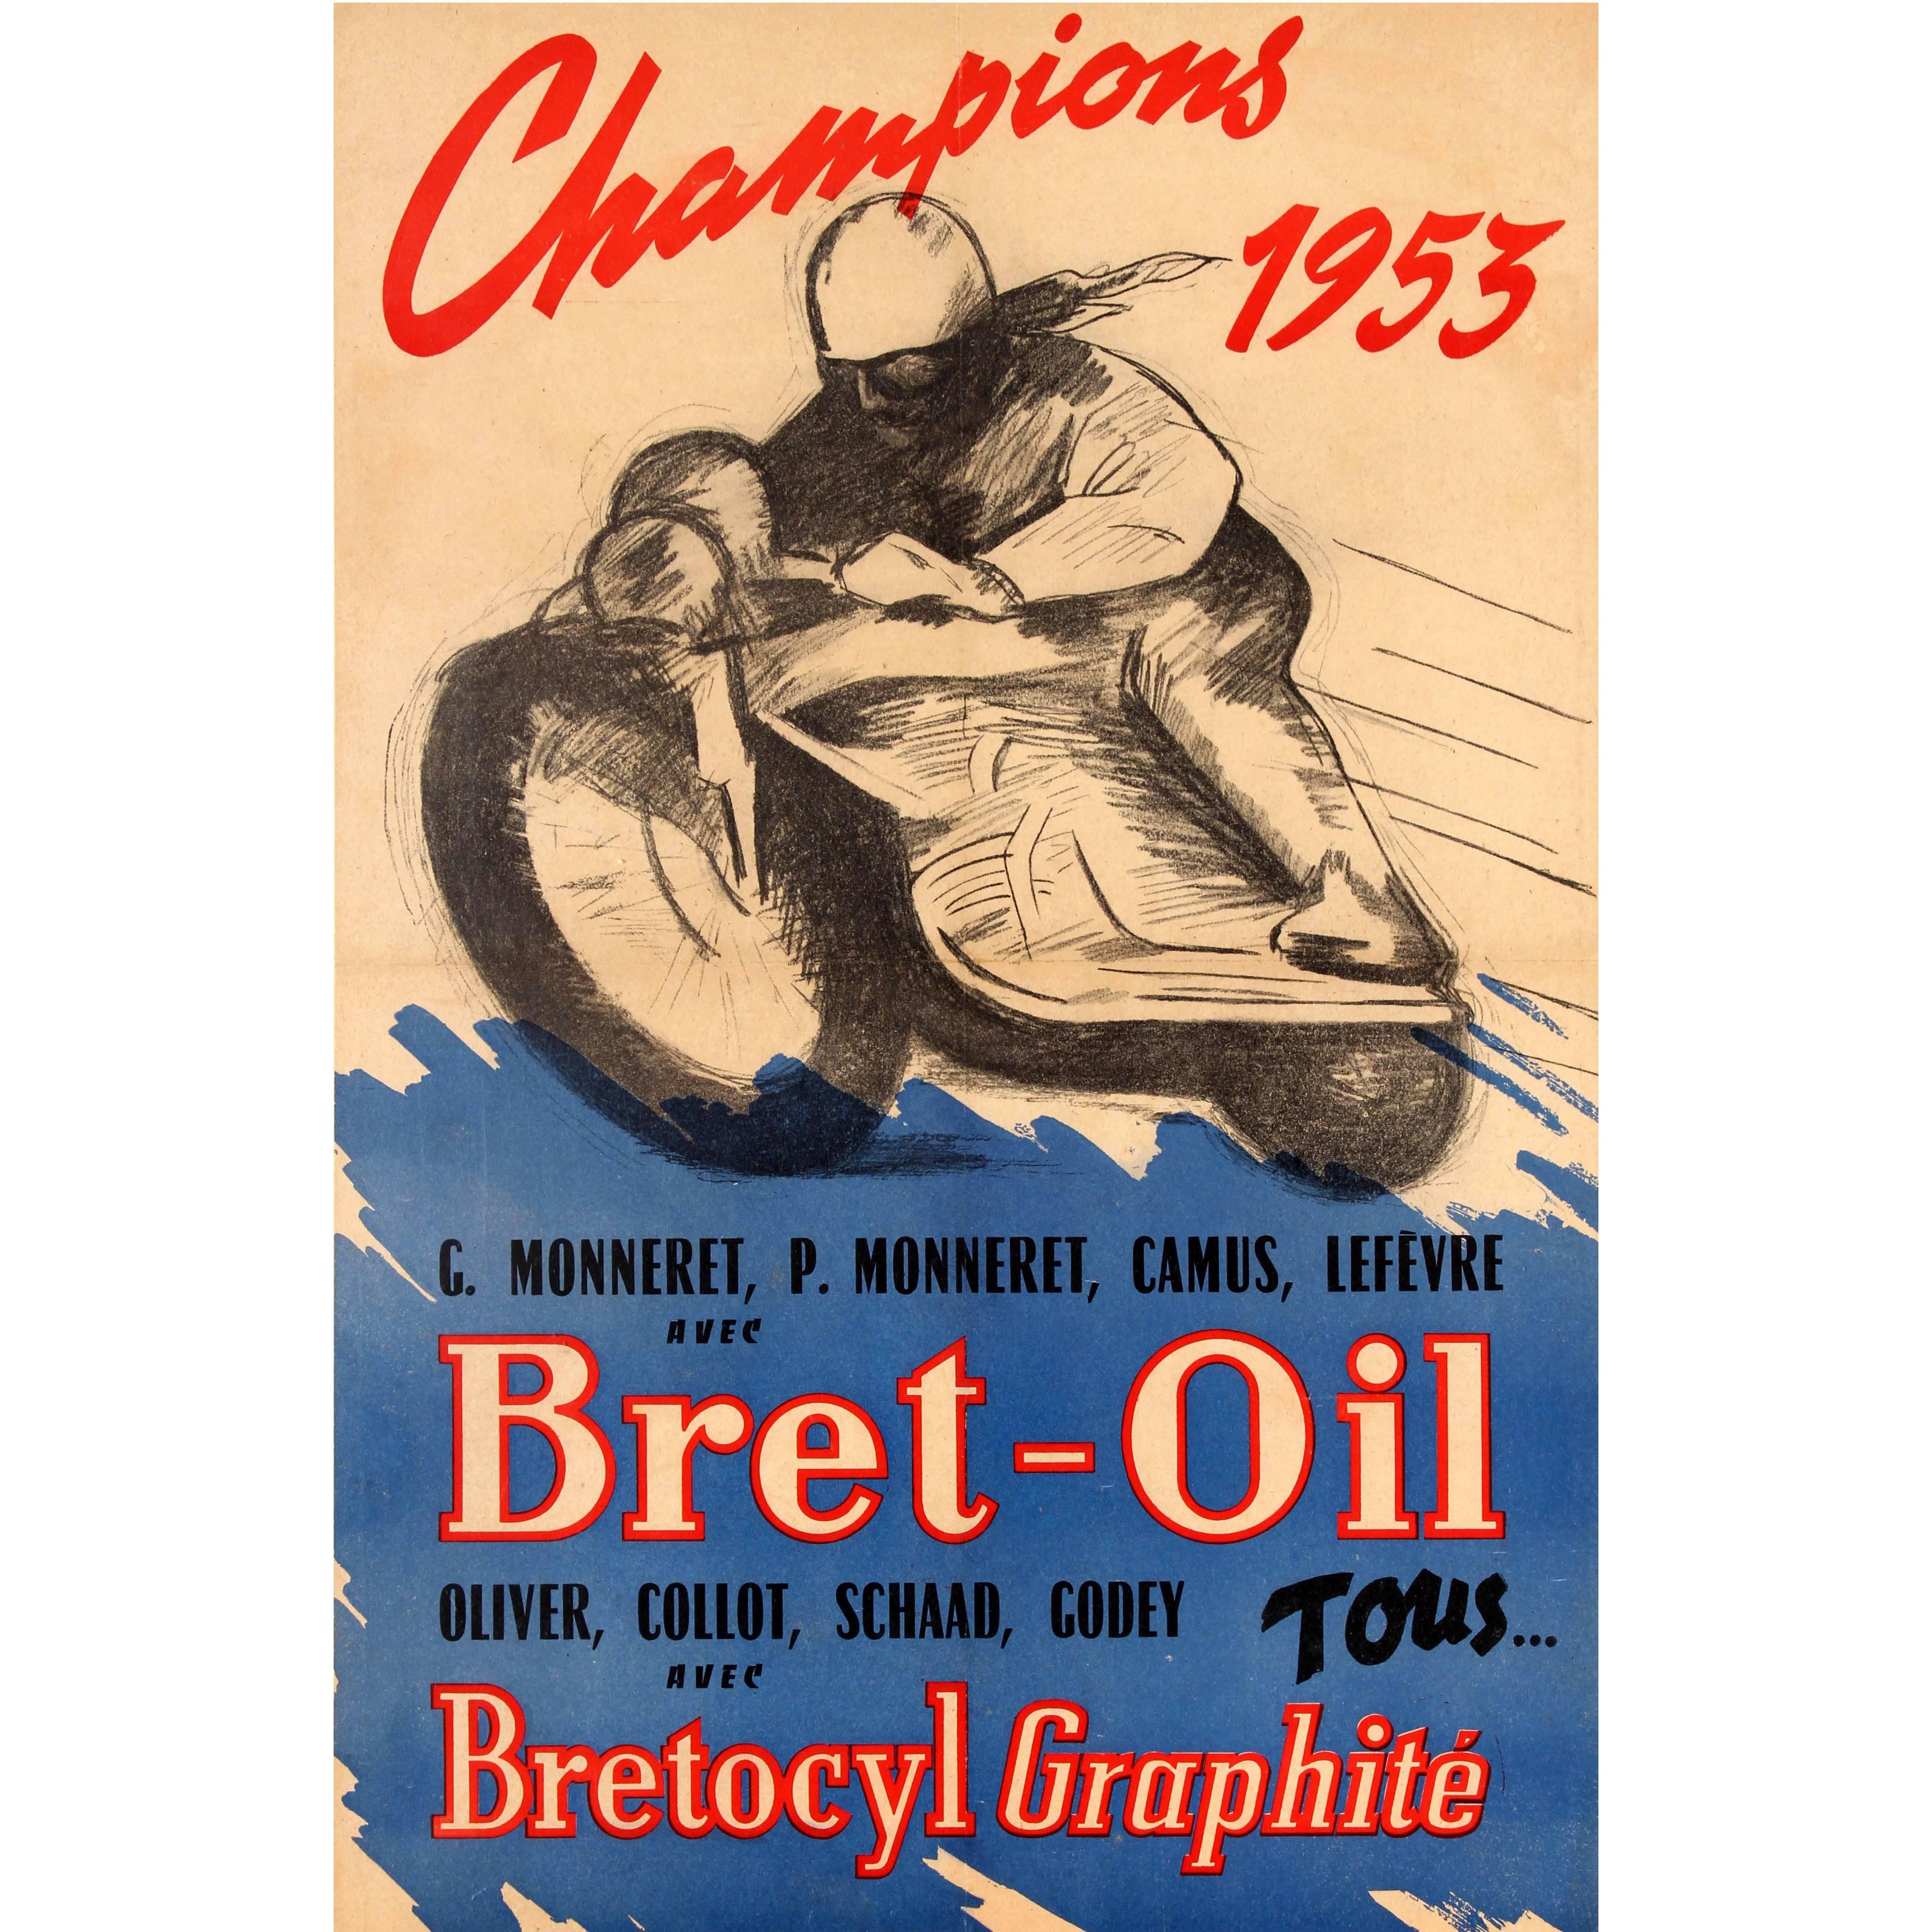 Original Vintage Bret Oil Motor Racing Sport Poster - Motorcycle Champions 1953